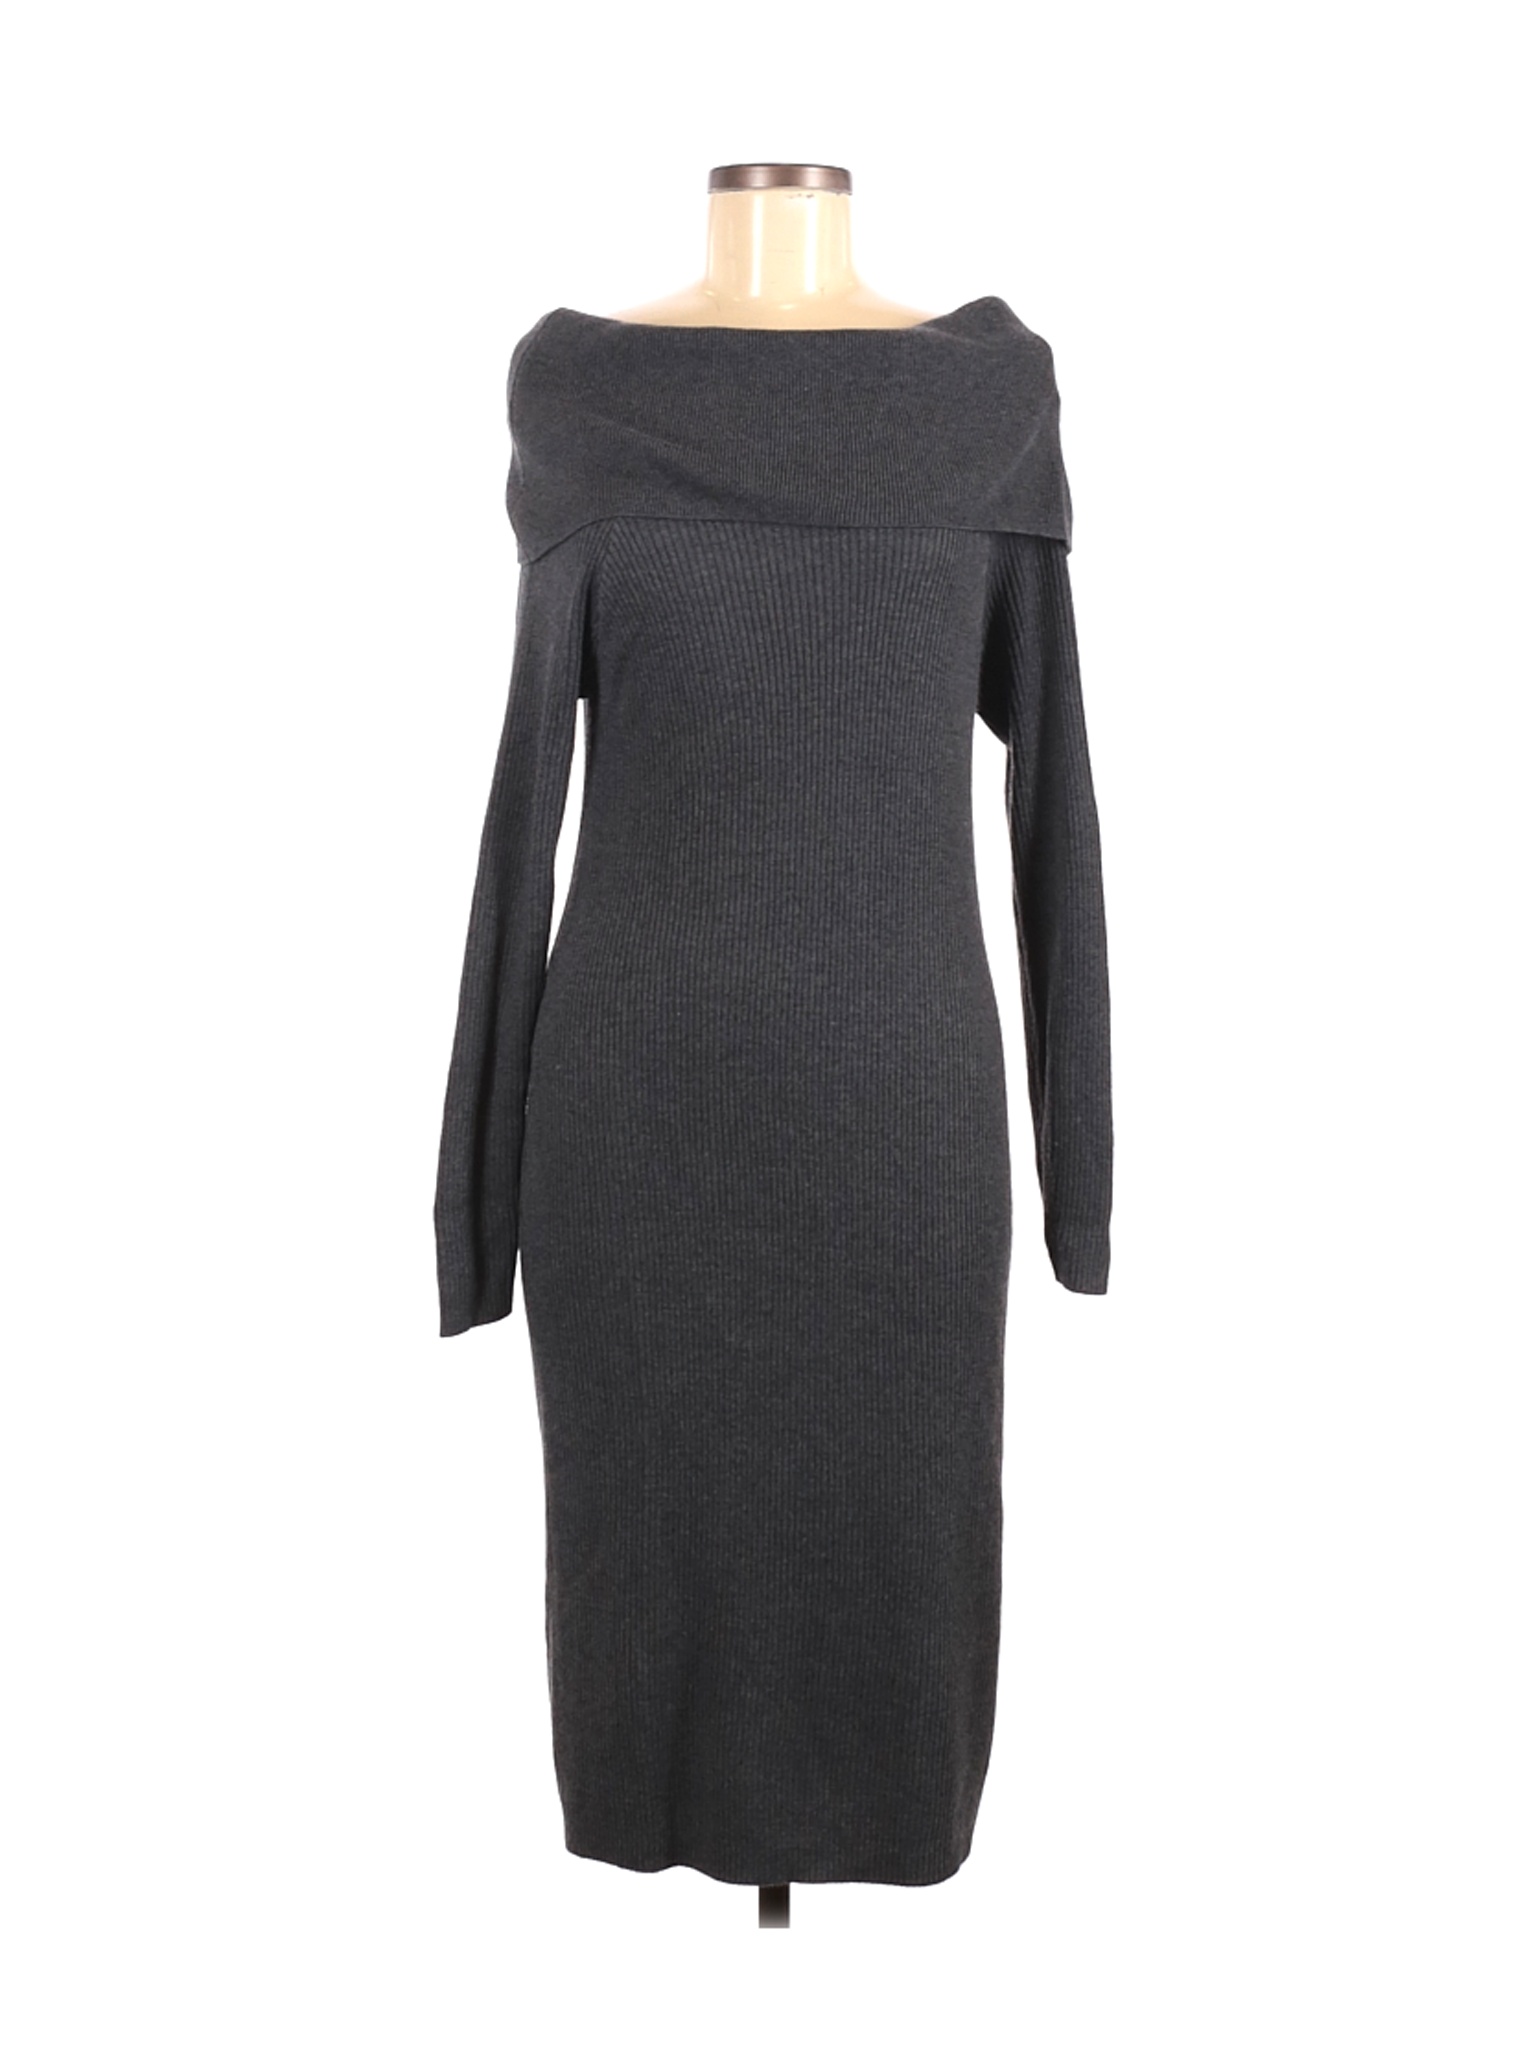 ASOS Women Gray Casual Dress 8 | eBay